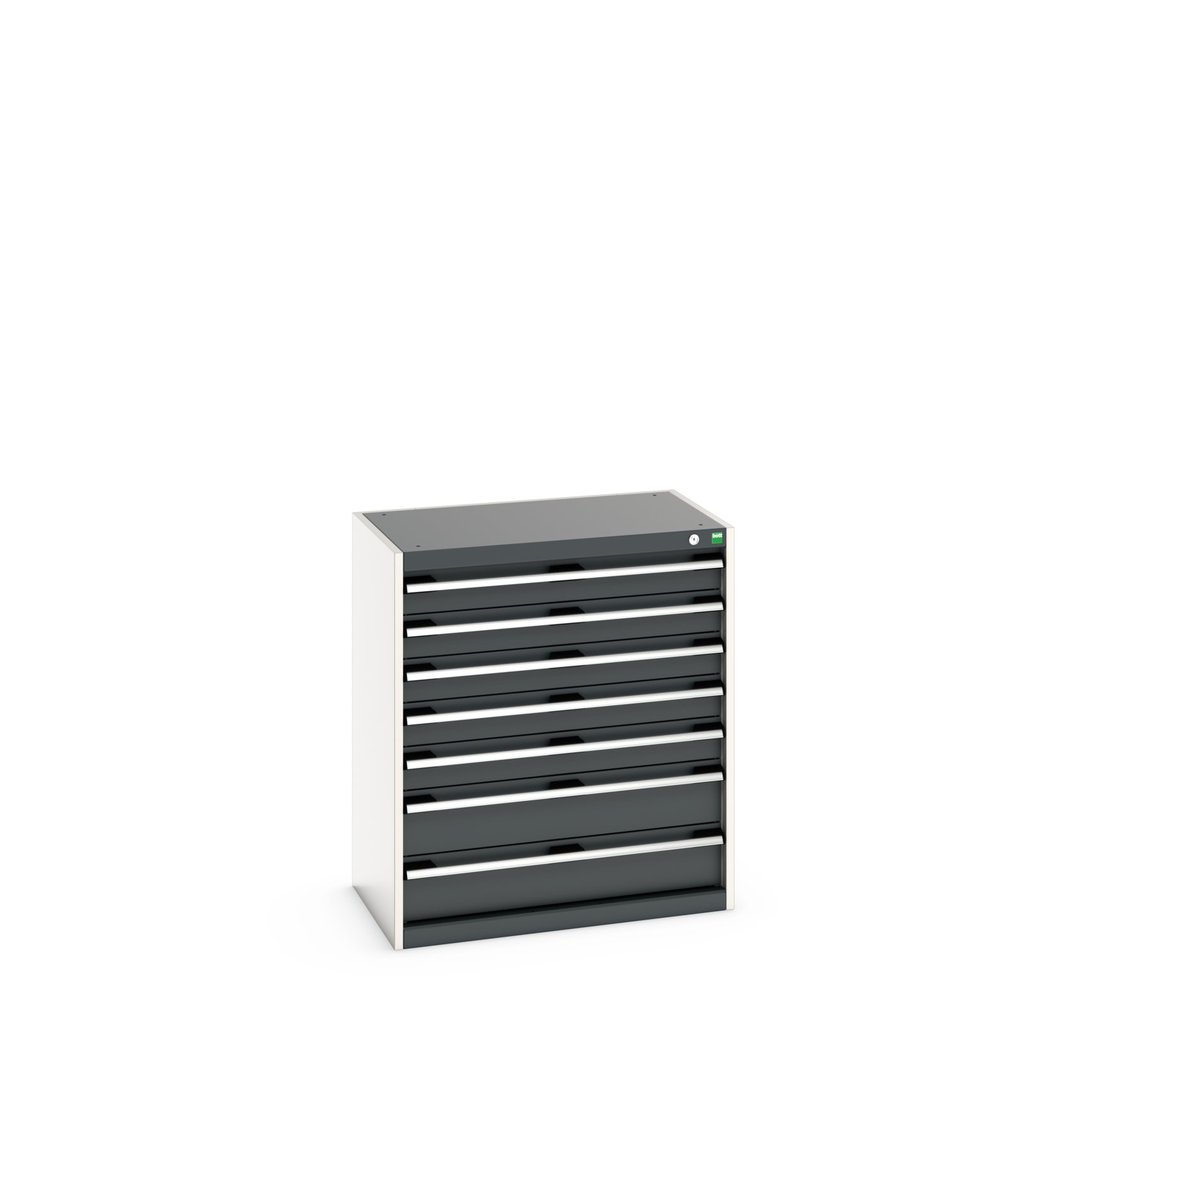 40012029. - cubio drawer cabinet